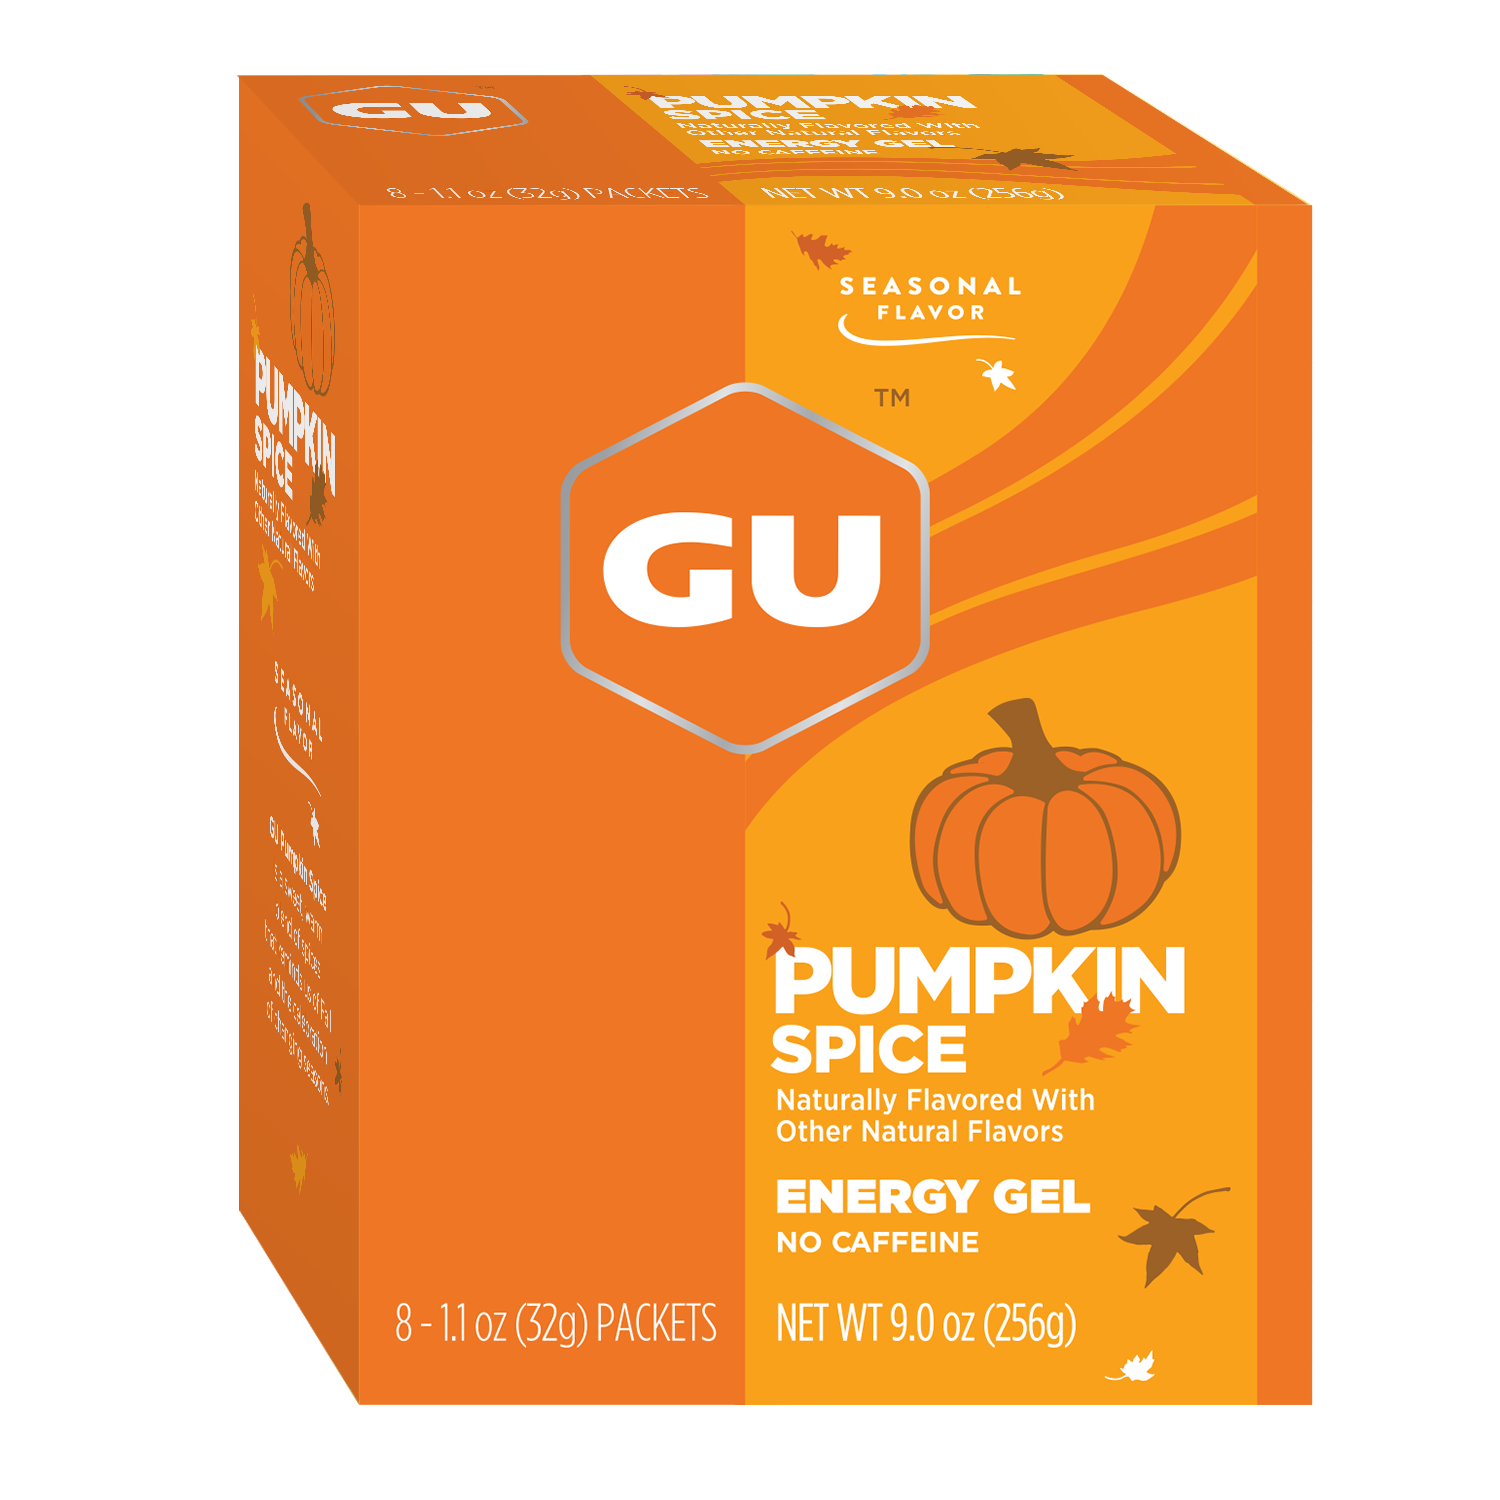 GU Energy Energigel Pumpkin Spice (8x32g)